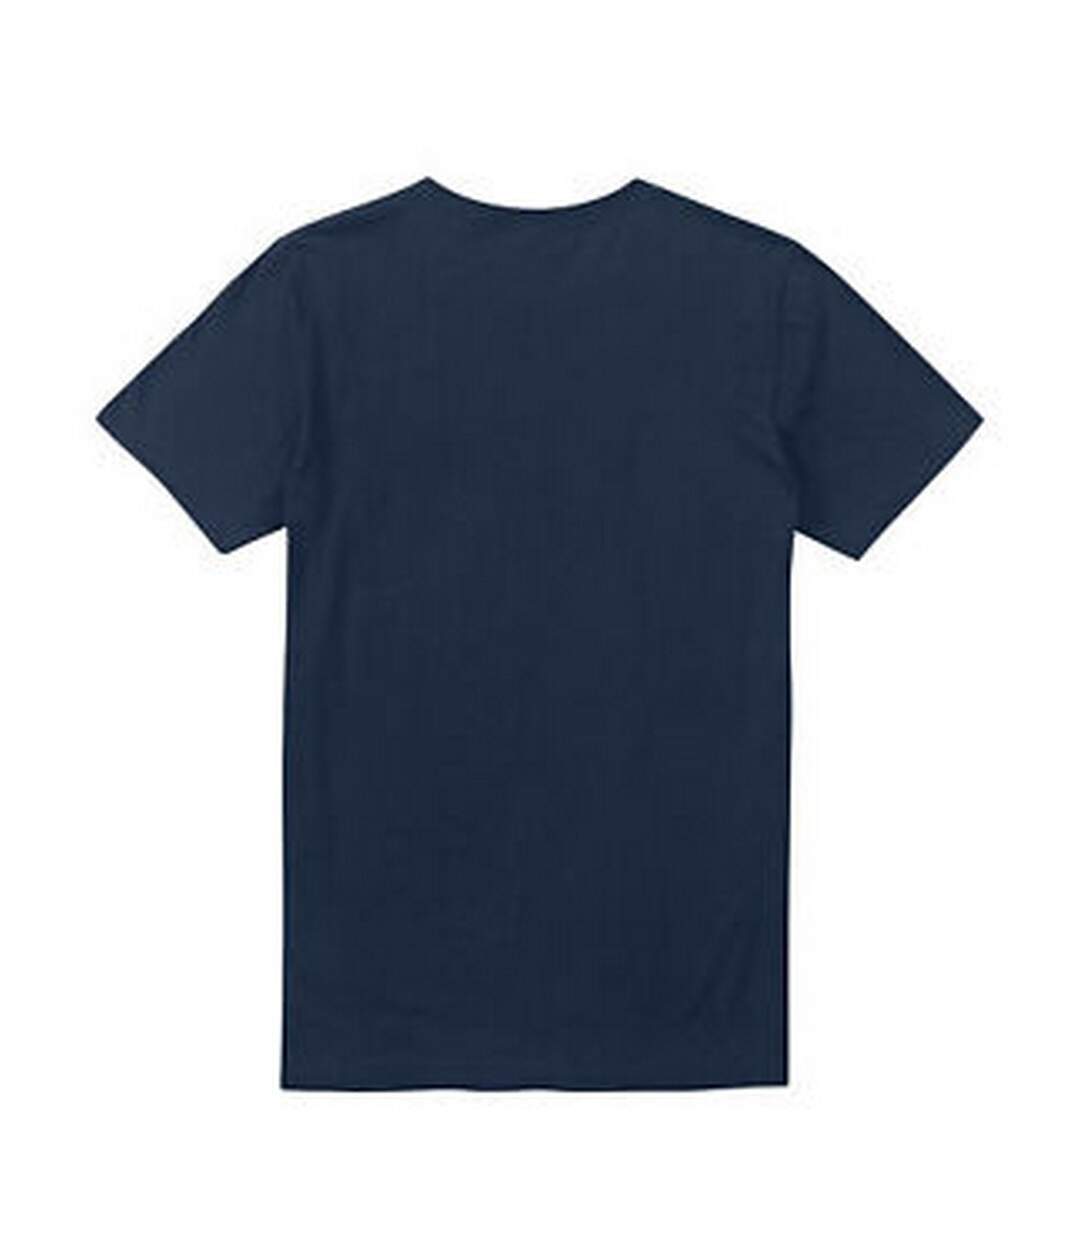 Zoo York - T-shirt - Homme (Bleu marine) - UTTV1233